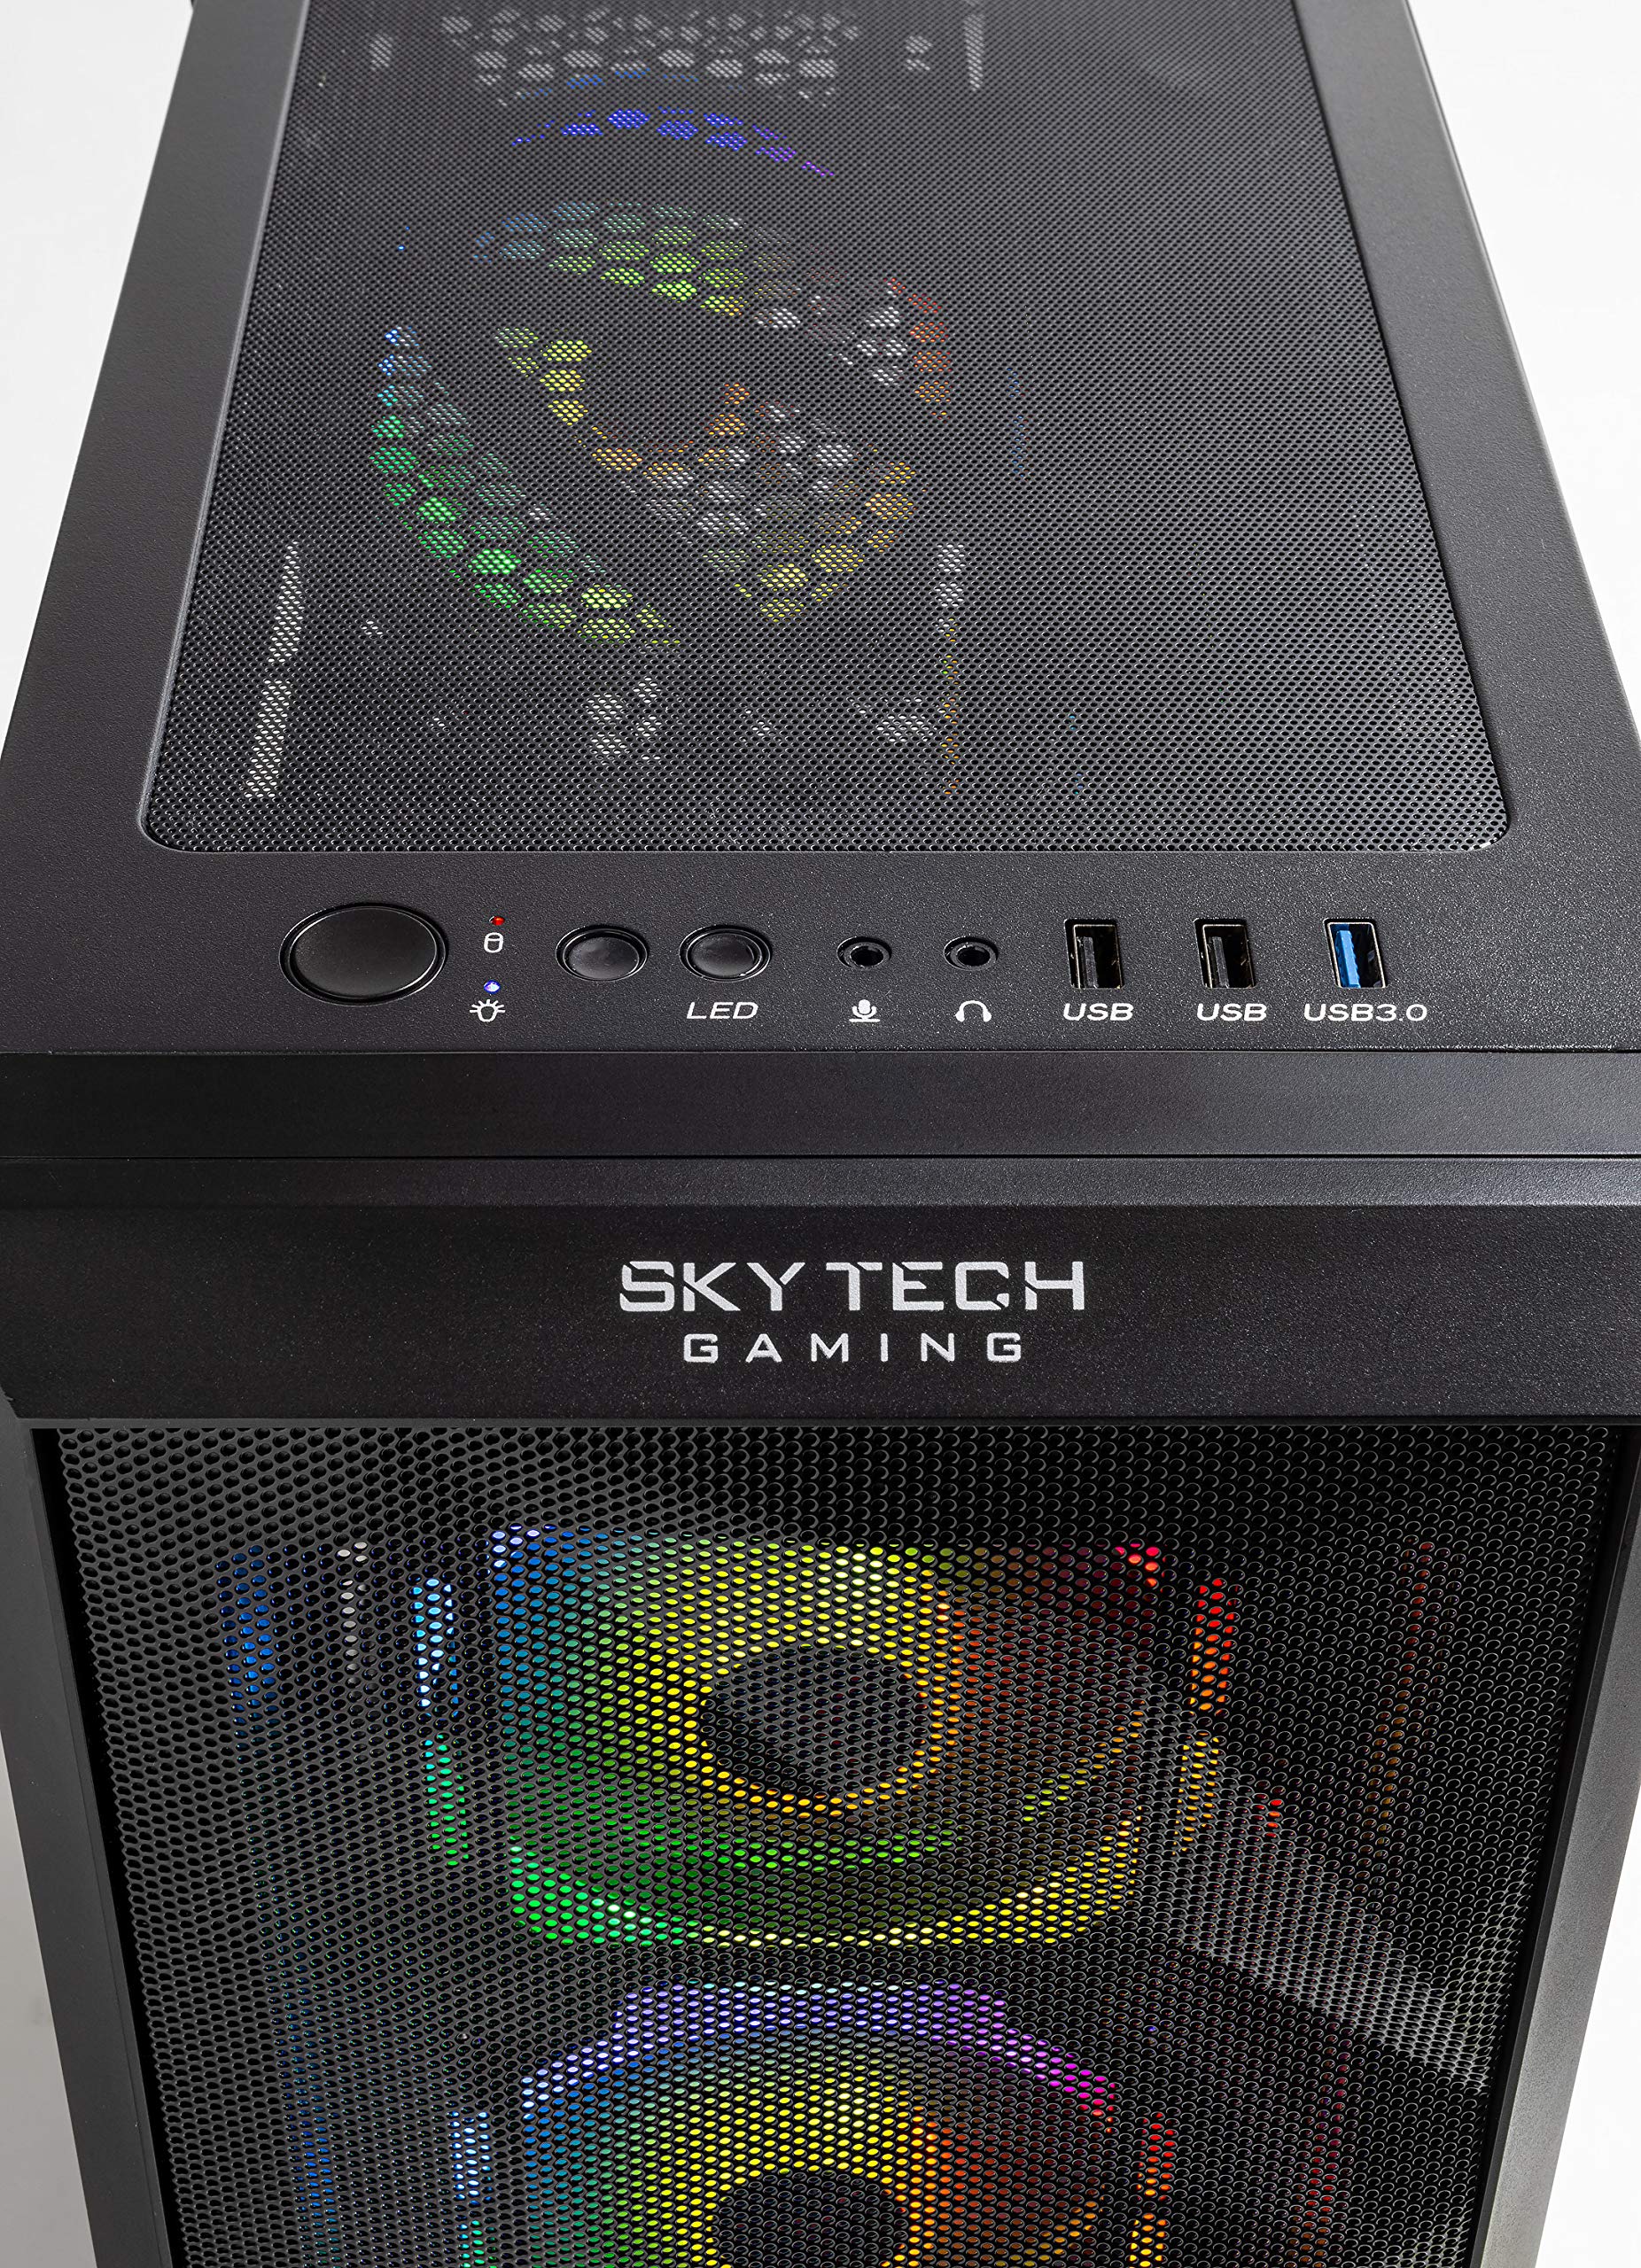 Skytech Chronos Gaming PC Desktop - AMD Ryzen 7 3700X 3.6GHz, RTX 3070 8GB, 16GB DDR4 3200, 1TB NVME, 650W Gold PSU, Windows 10 Home 64-bit, Black